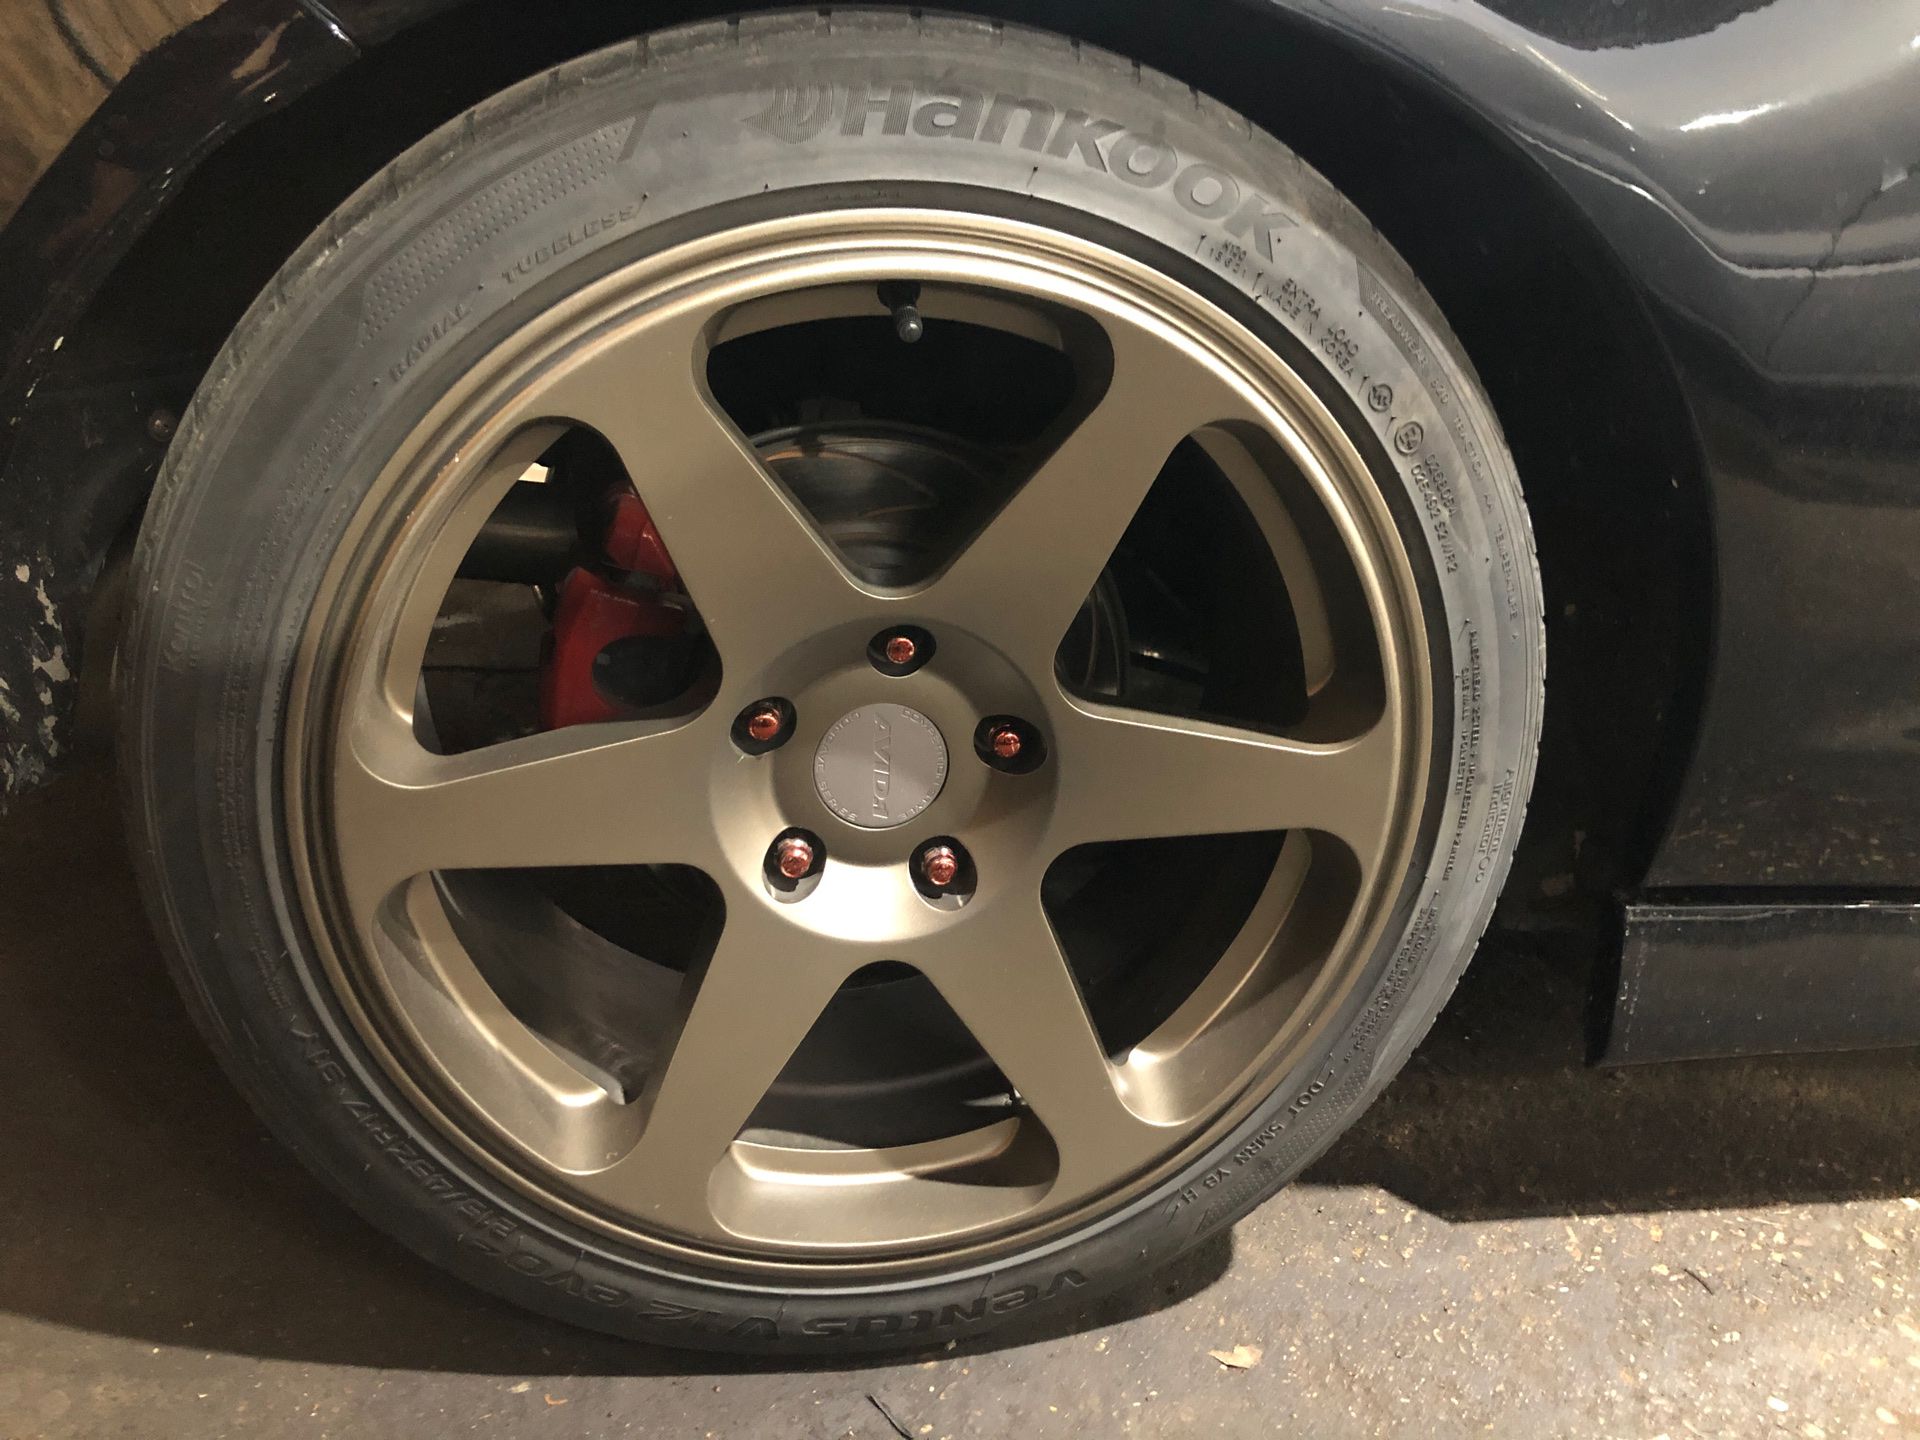 21545zr17 wheels w/ hankook ventus tires